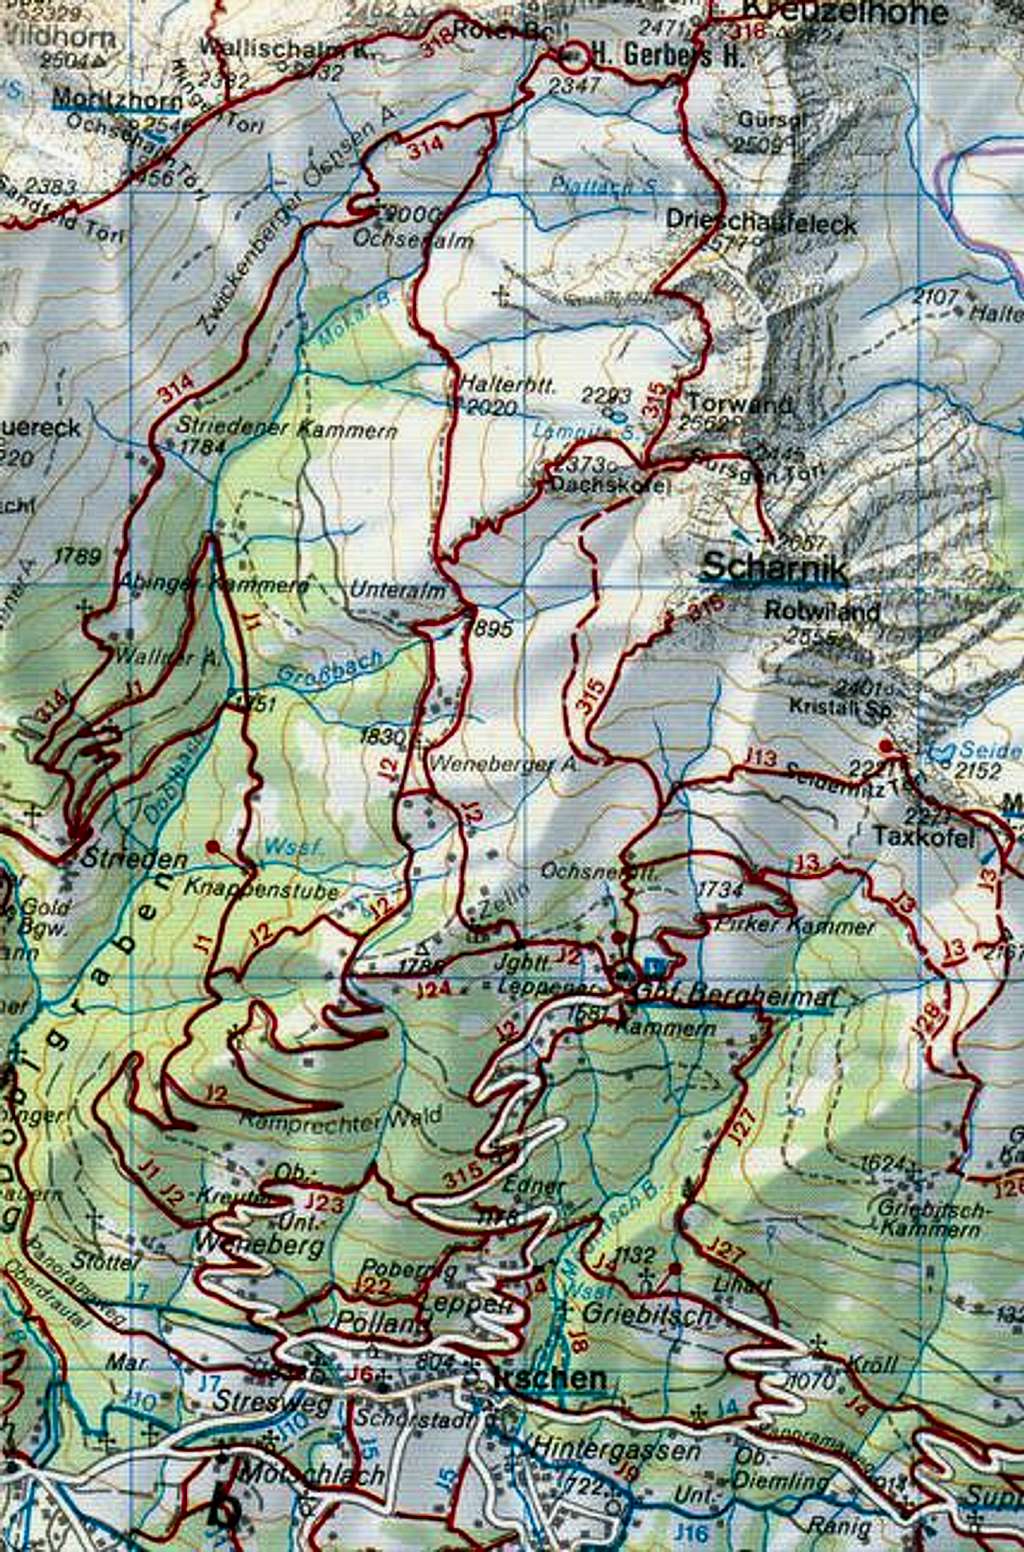 The Scharnik map